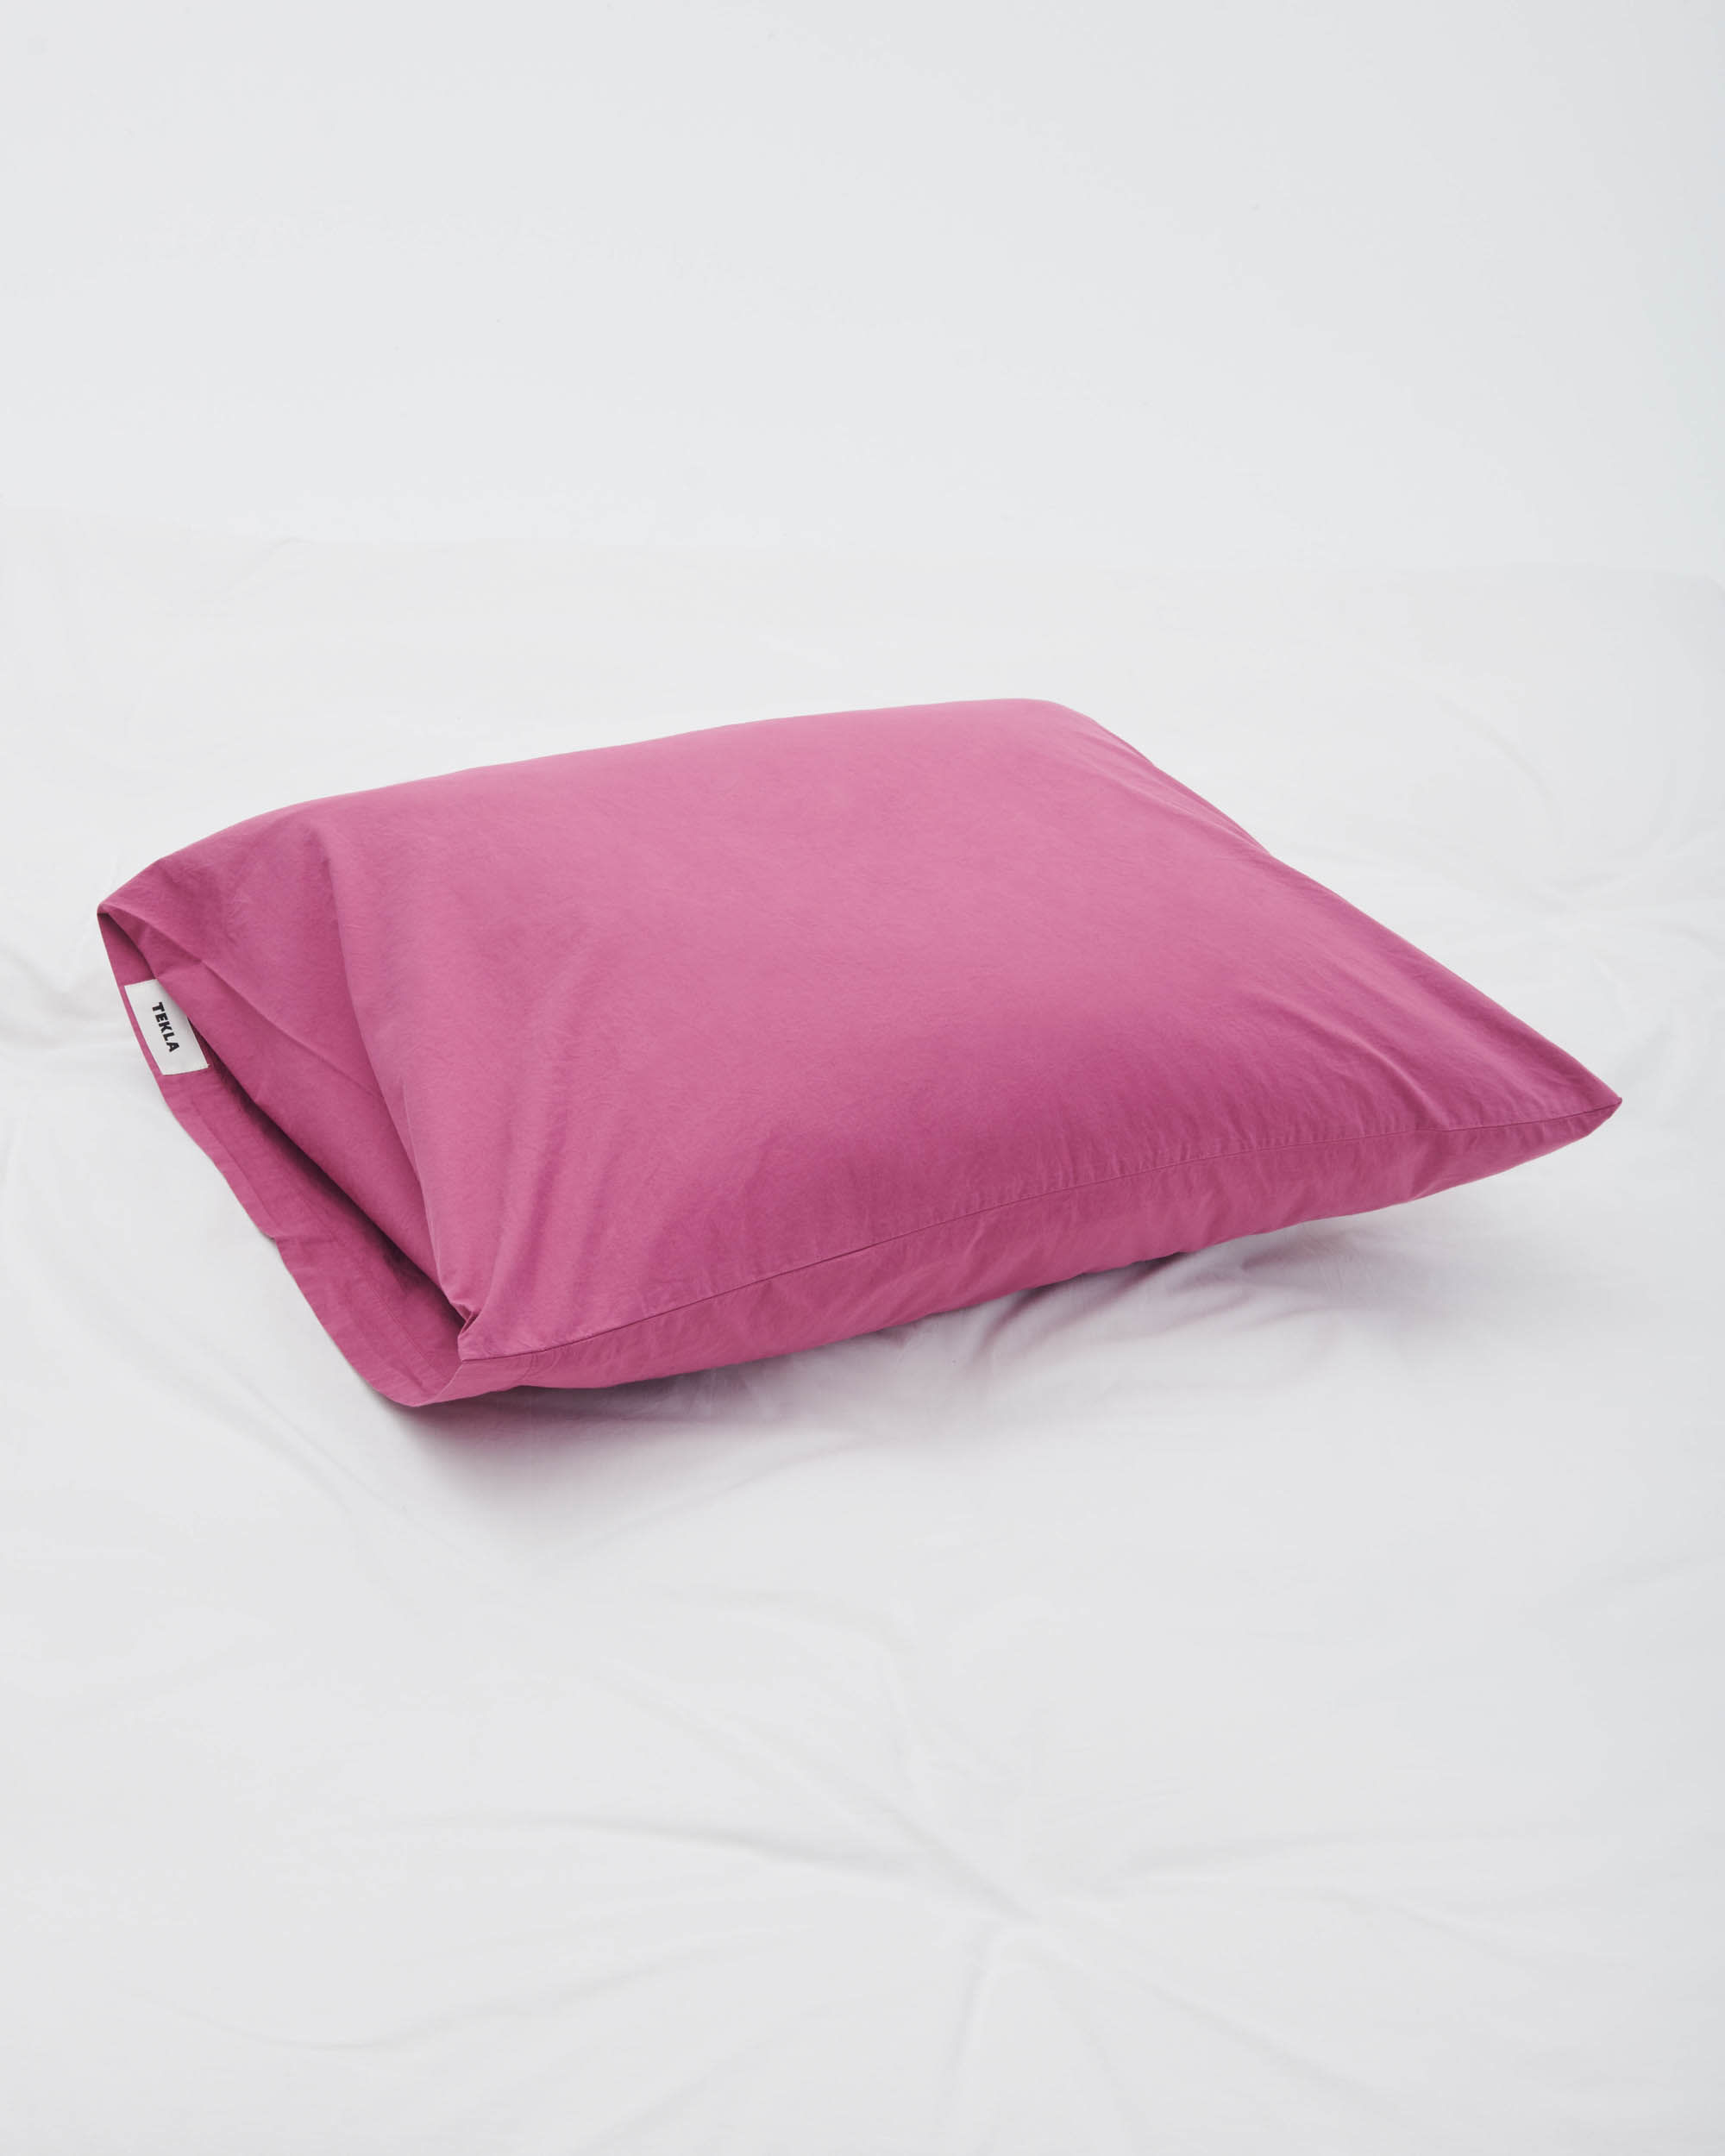 Percale pillow sham – Lingonberry